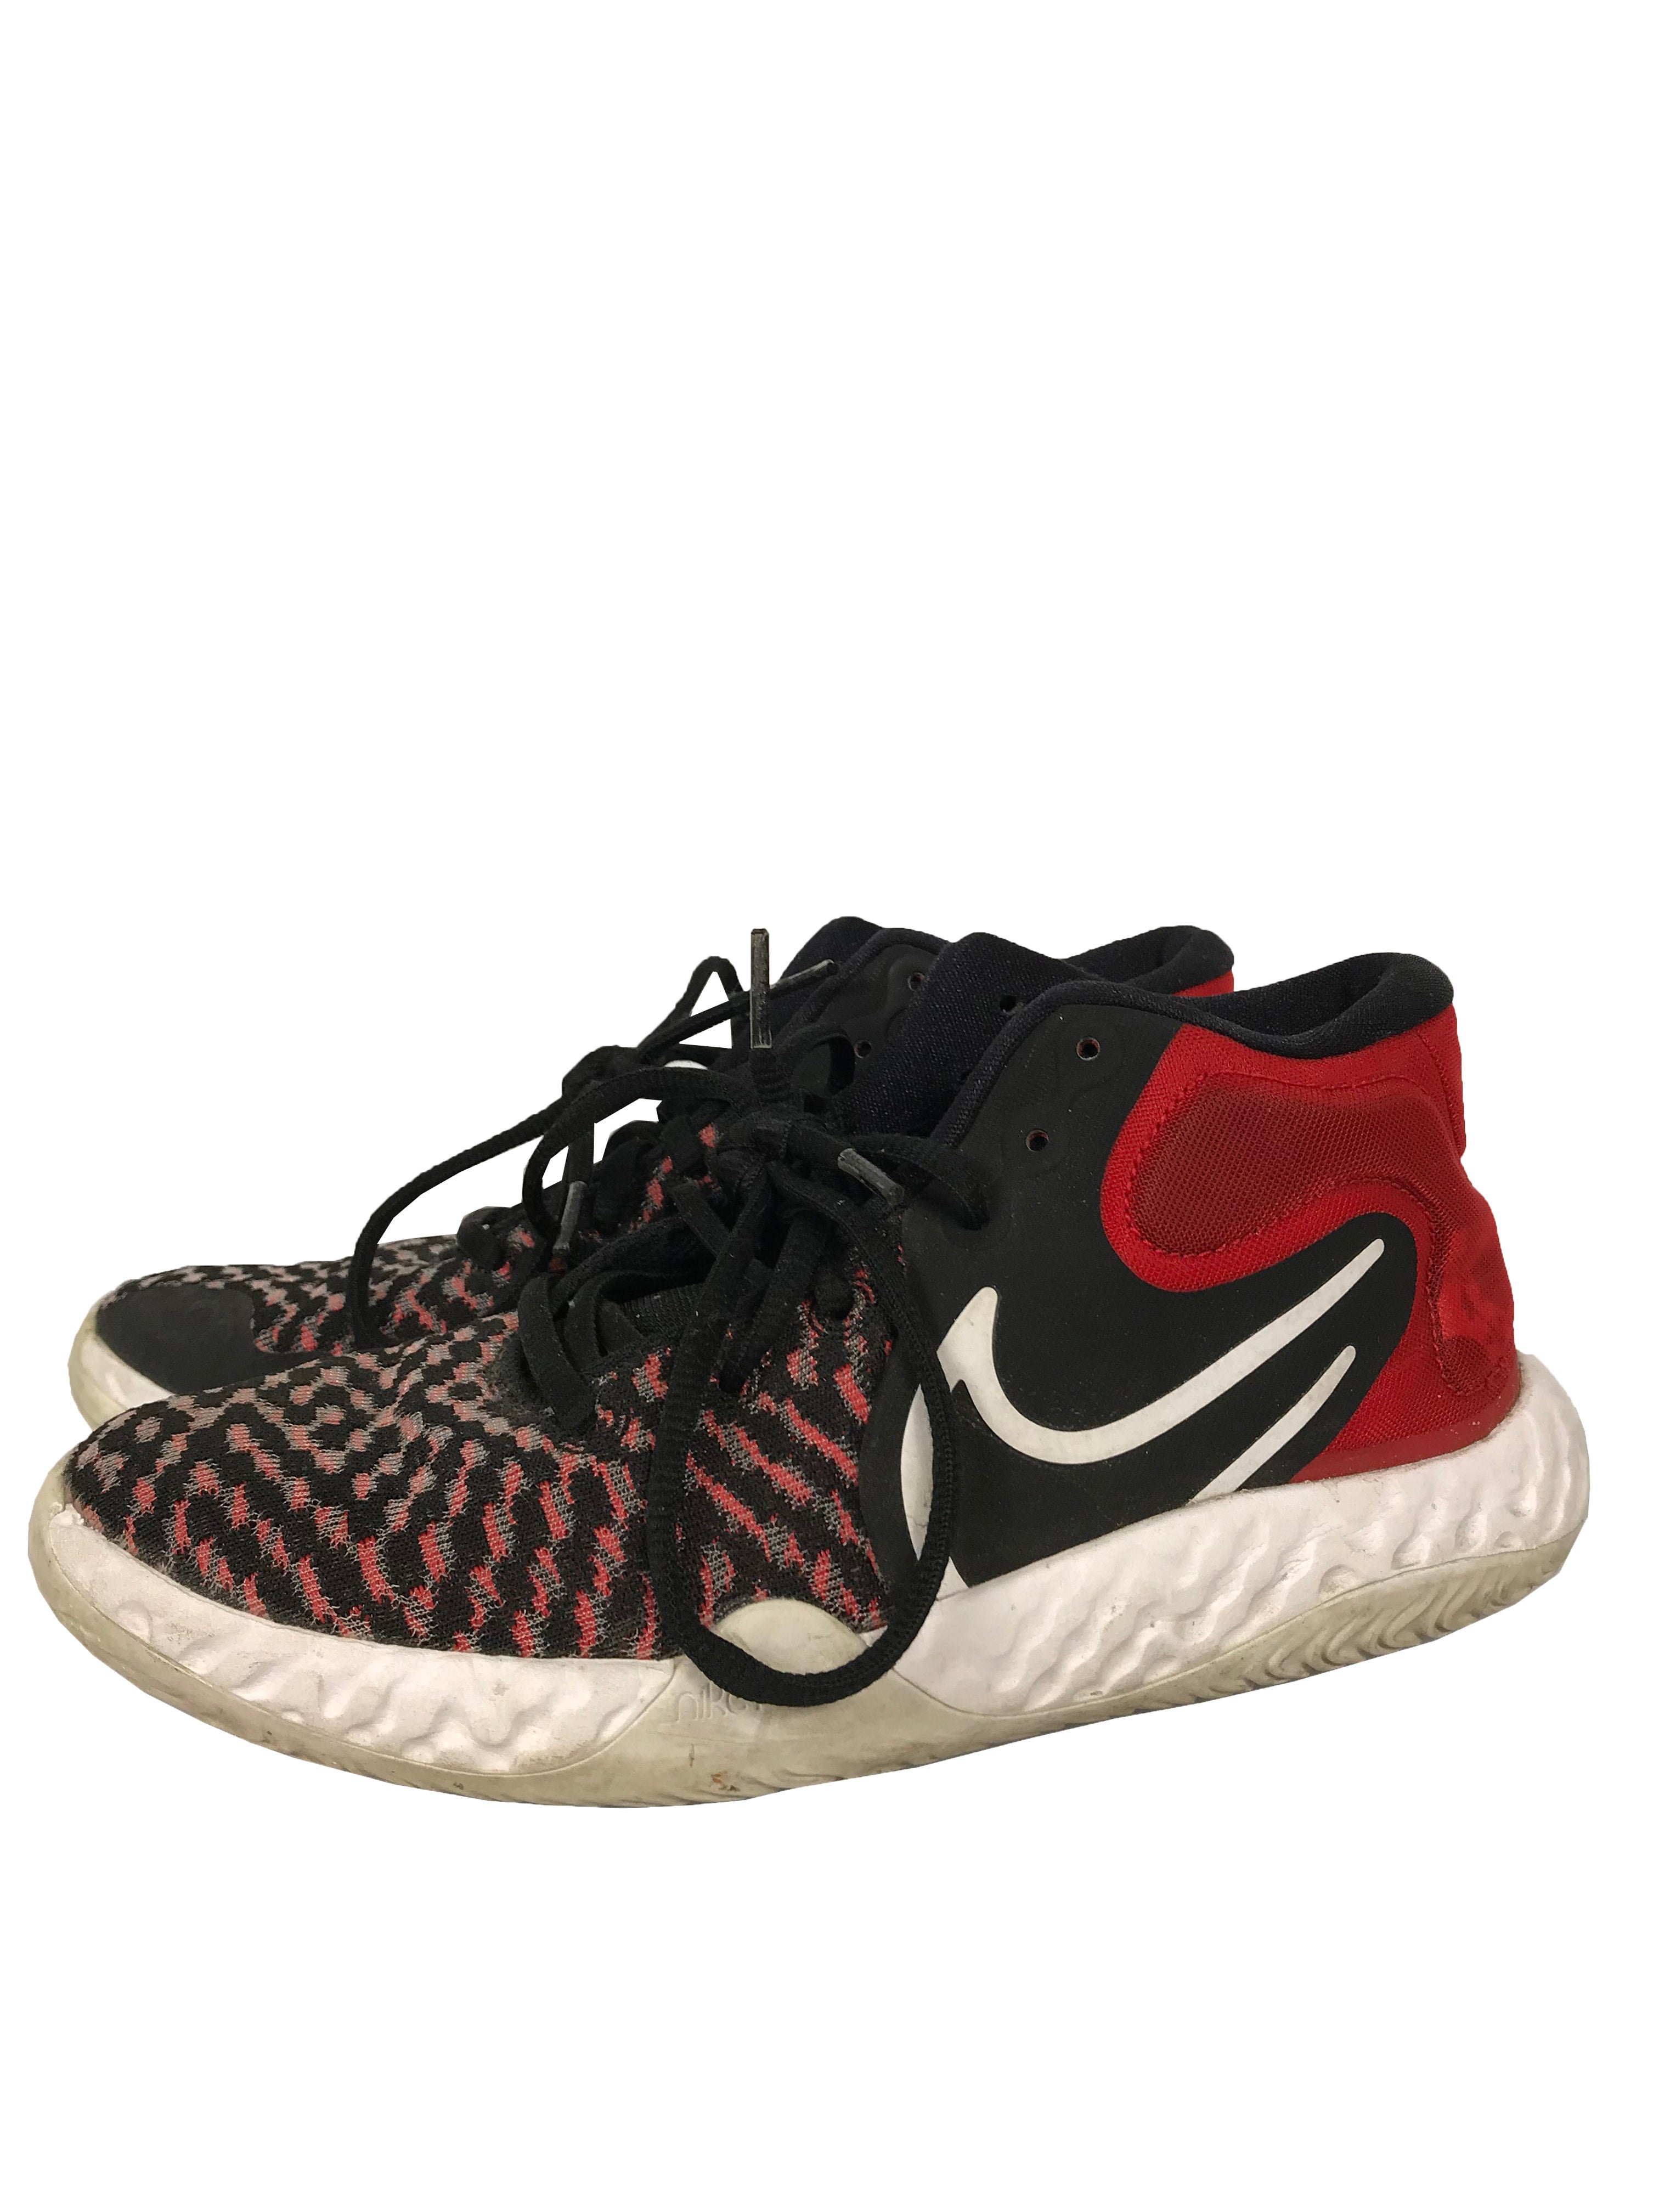 Nike Black & Red KD Trey 5 VIII Basketball Shoes Kid's Size 6Y